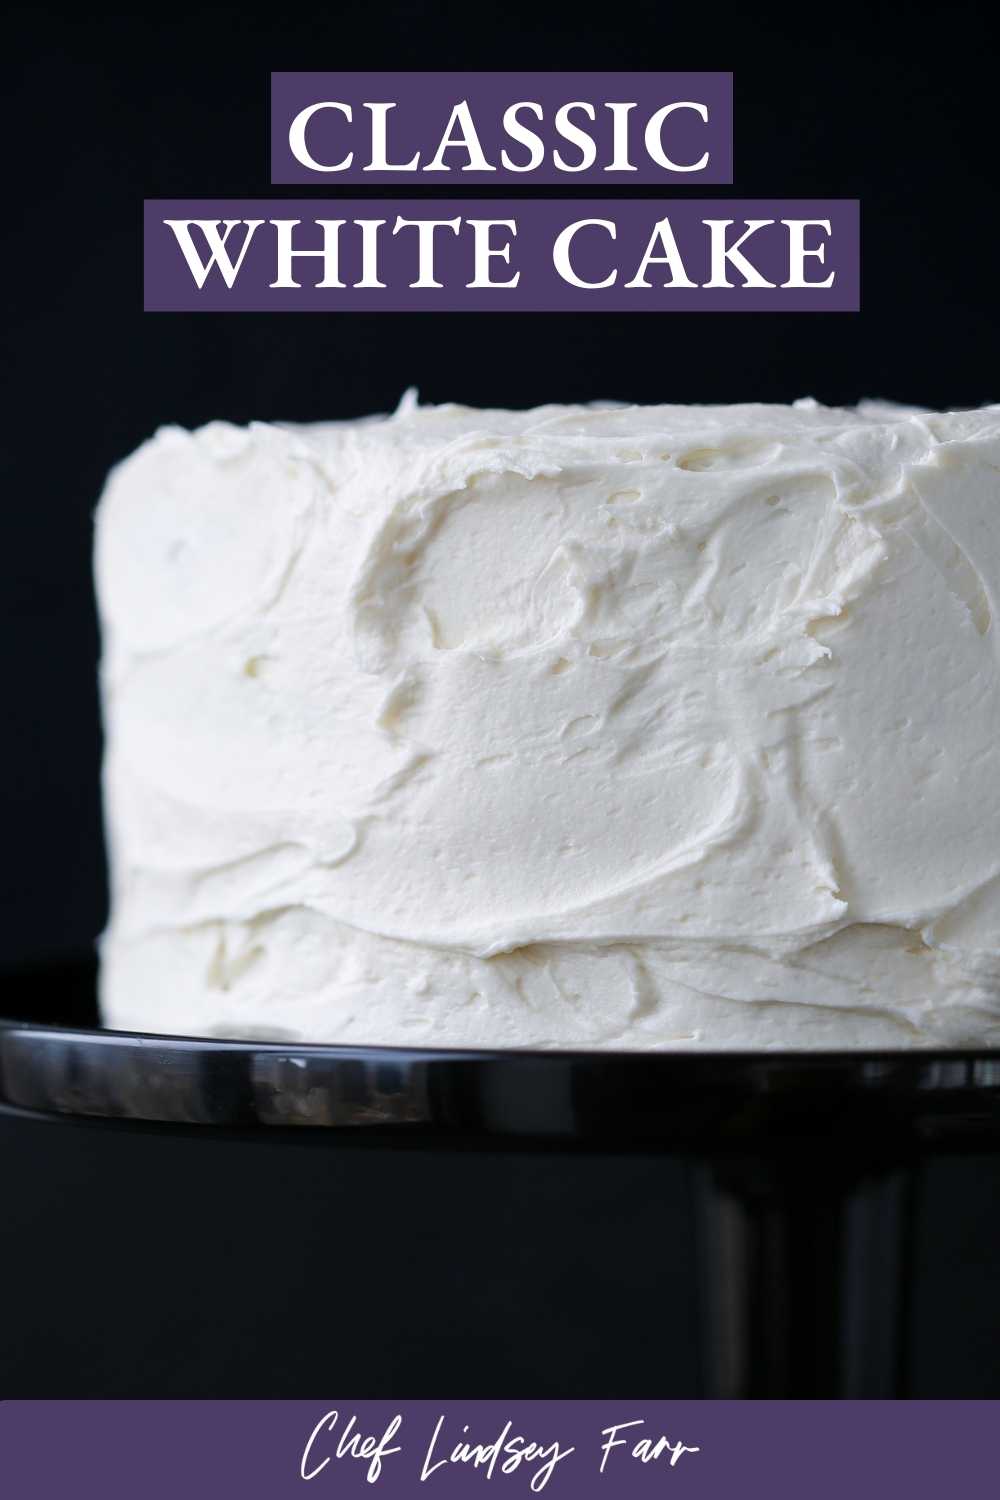 Classic White Cake Whole Cake